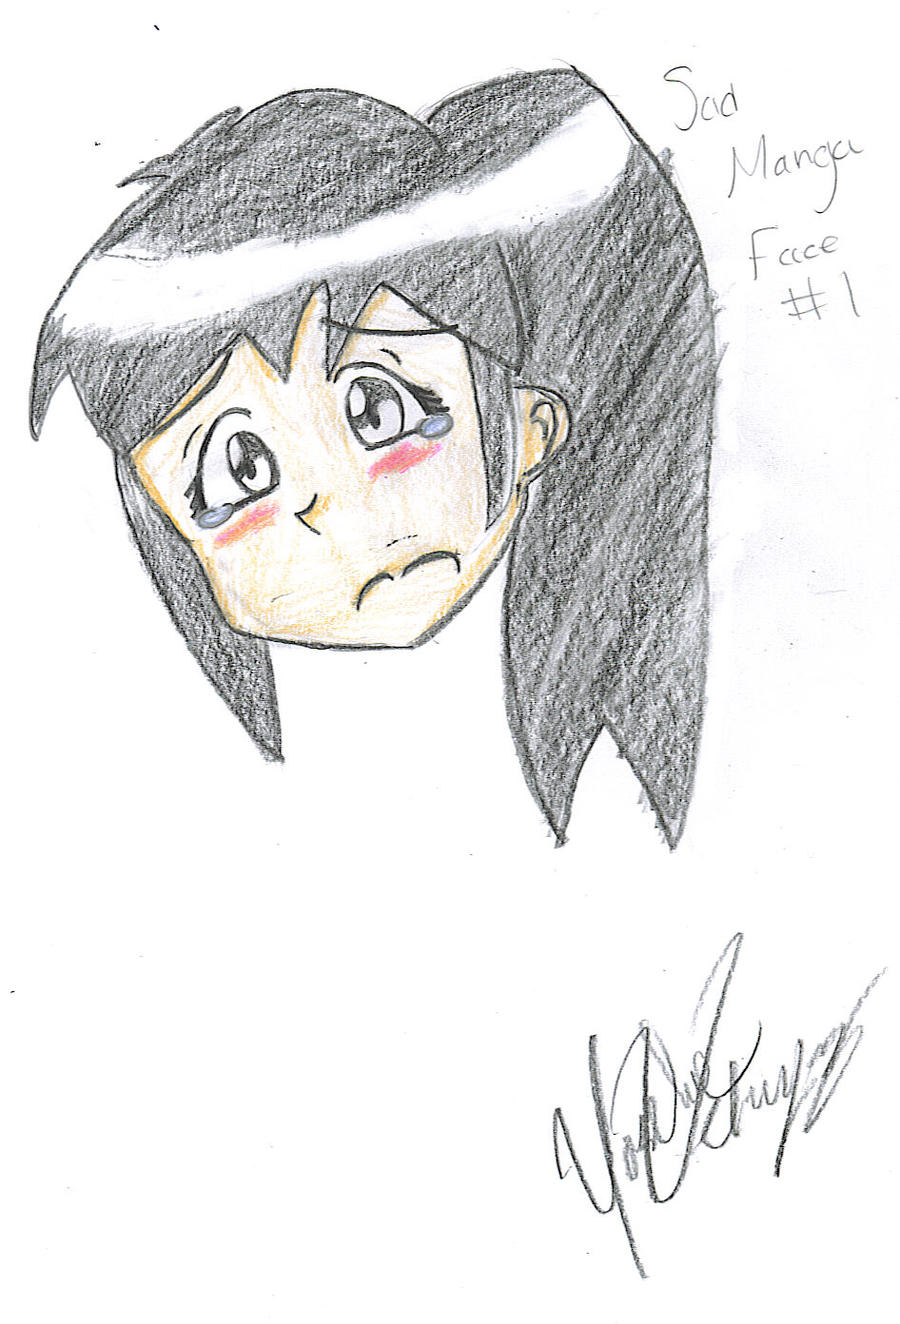 Sad face manga 1 by NiteNdPurity on DeviantArt